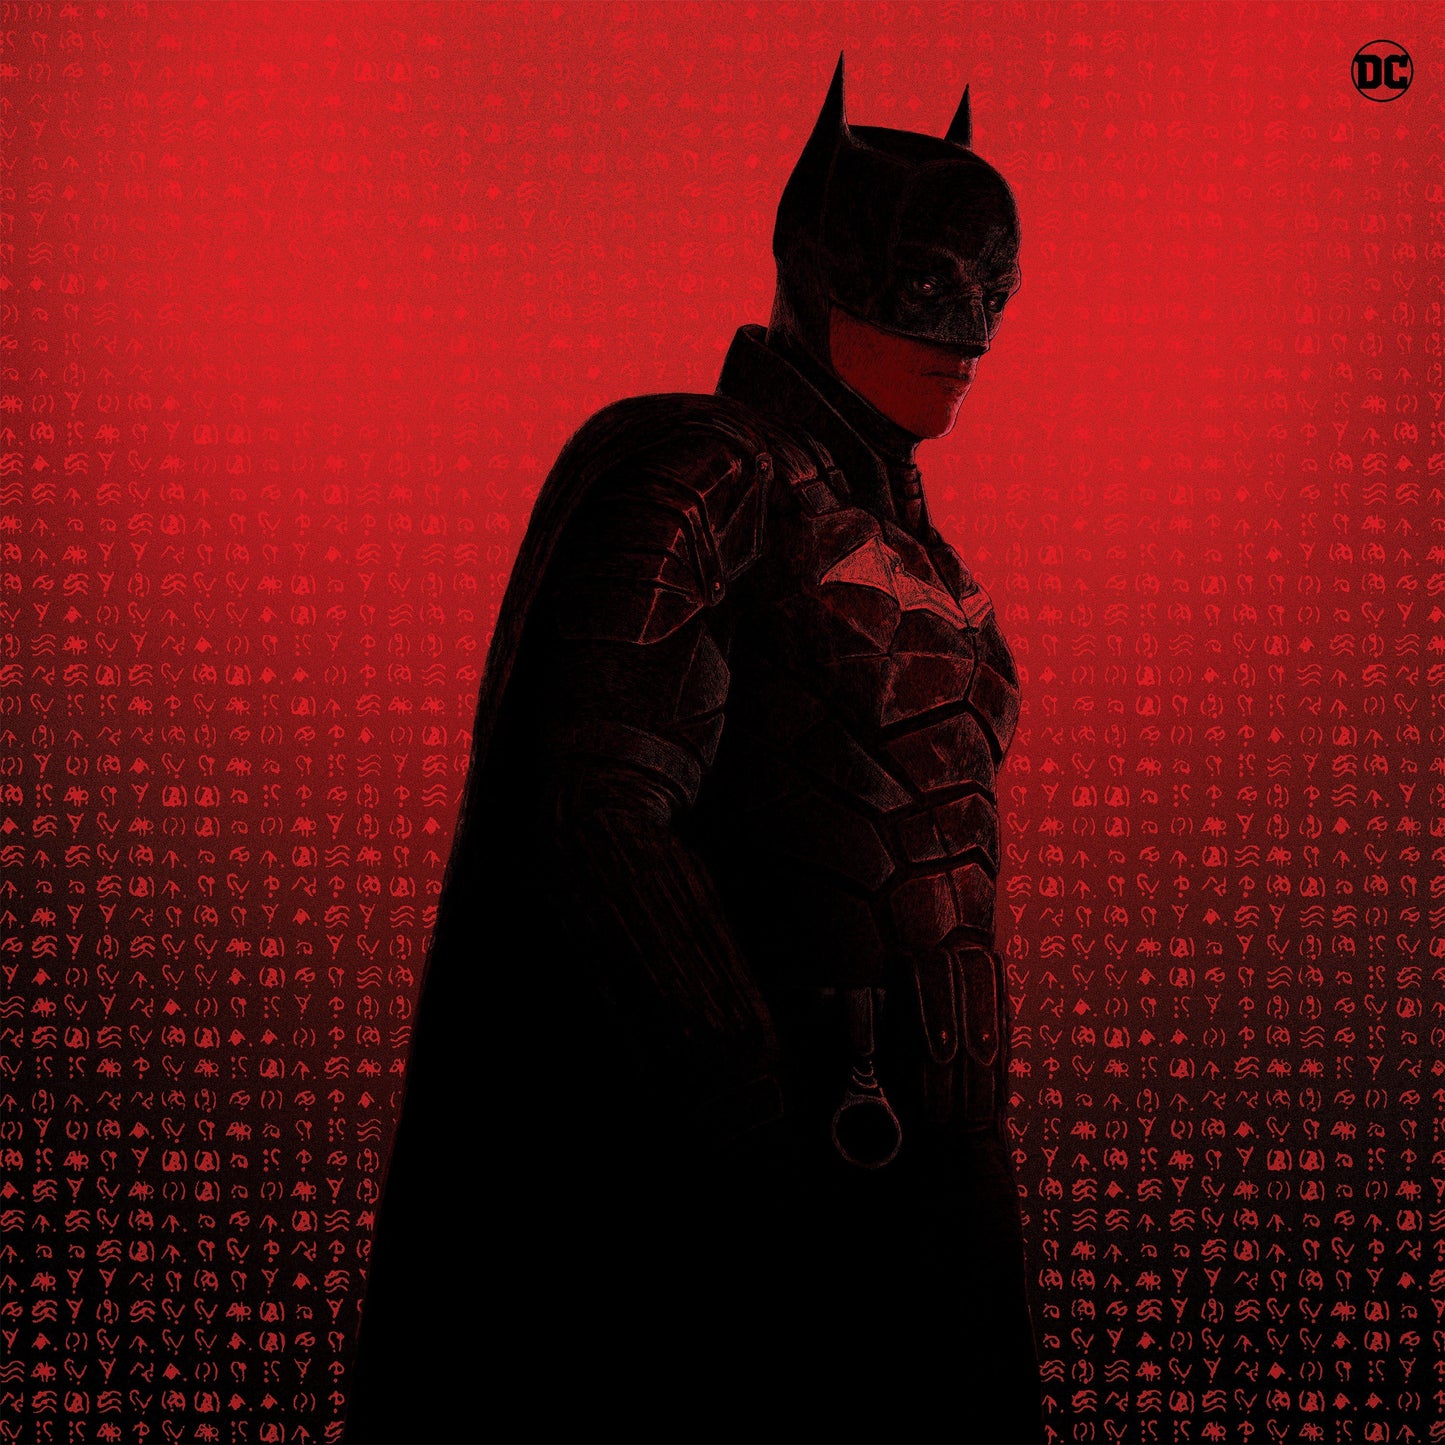 MOND-262 - Michael Giacchino - The Batman (Original Motion Picture Soundtrack)